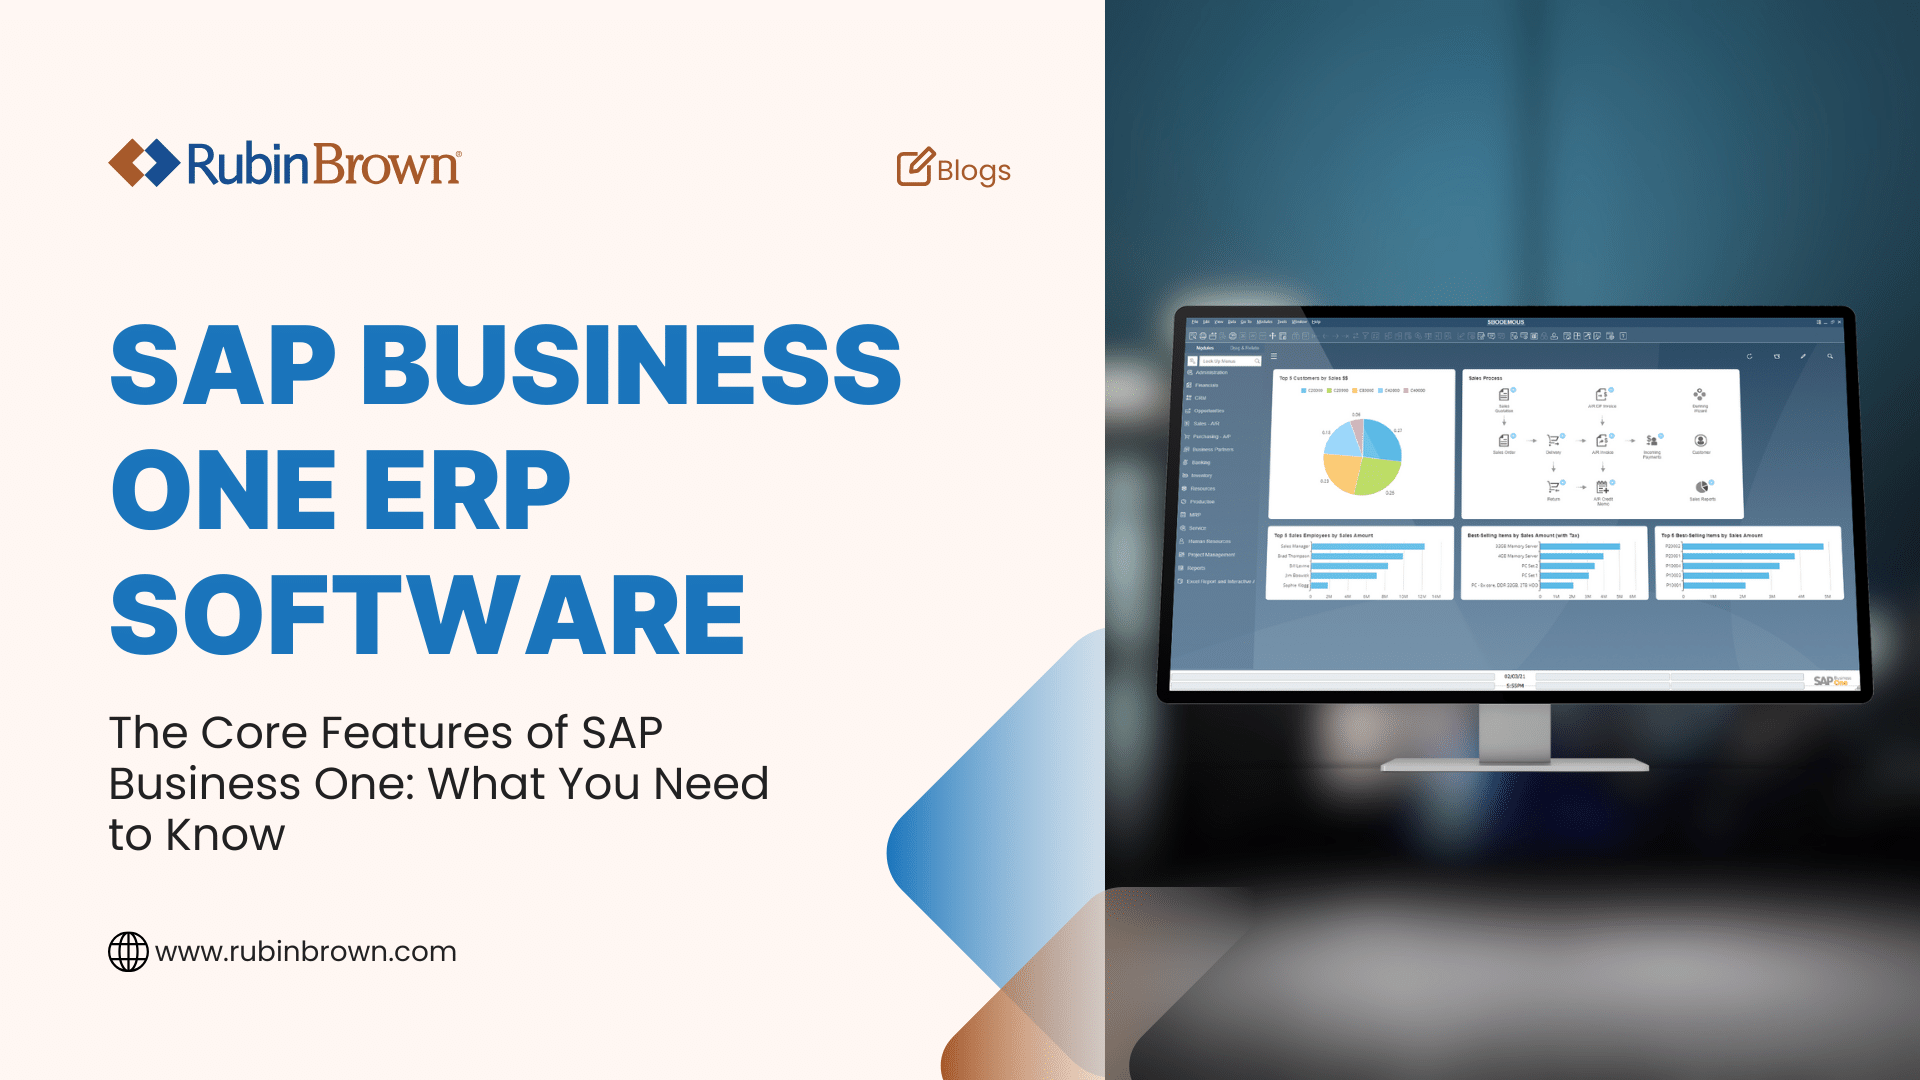 SAP Business One ERP Software: An Overview